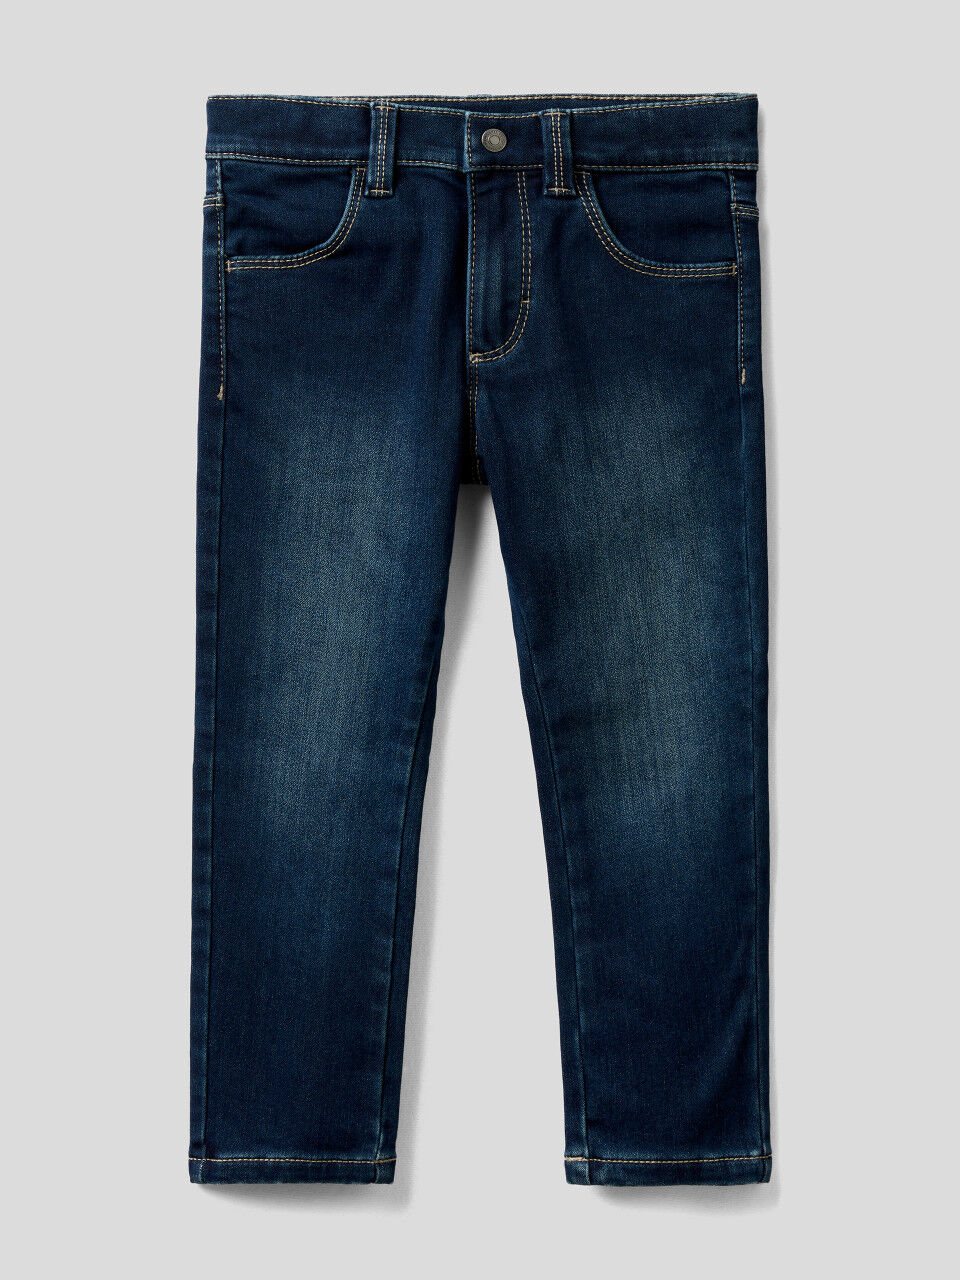 Five-pocket thermal jeans